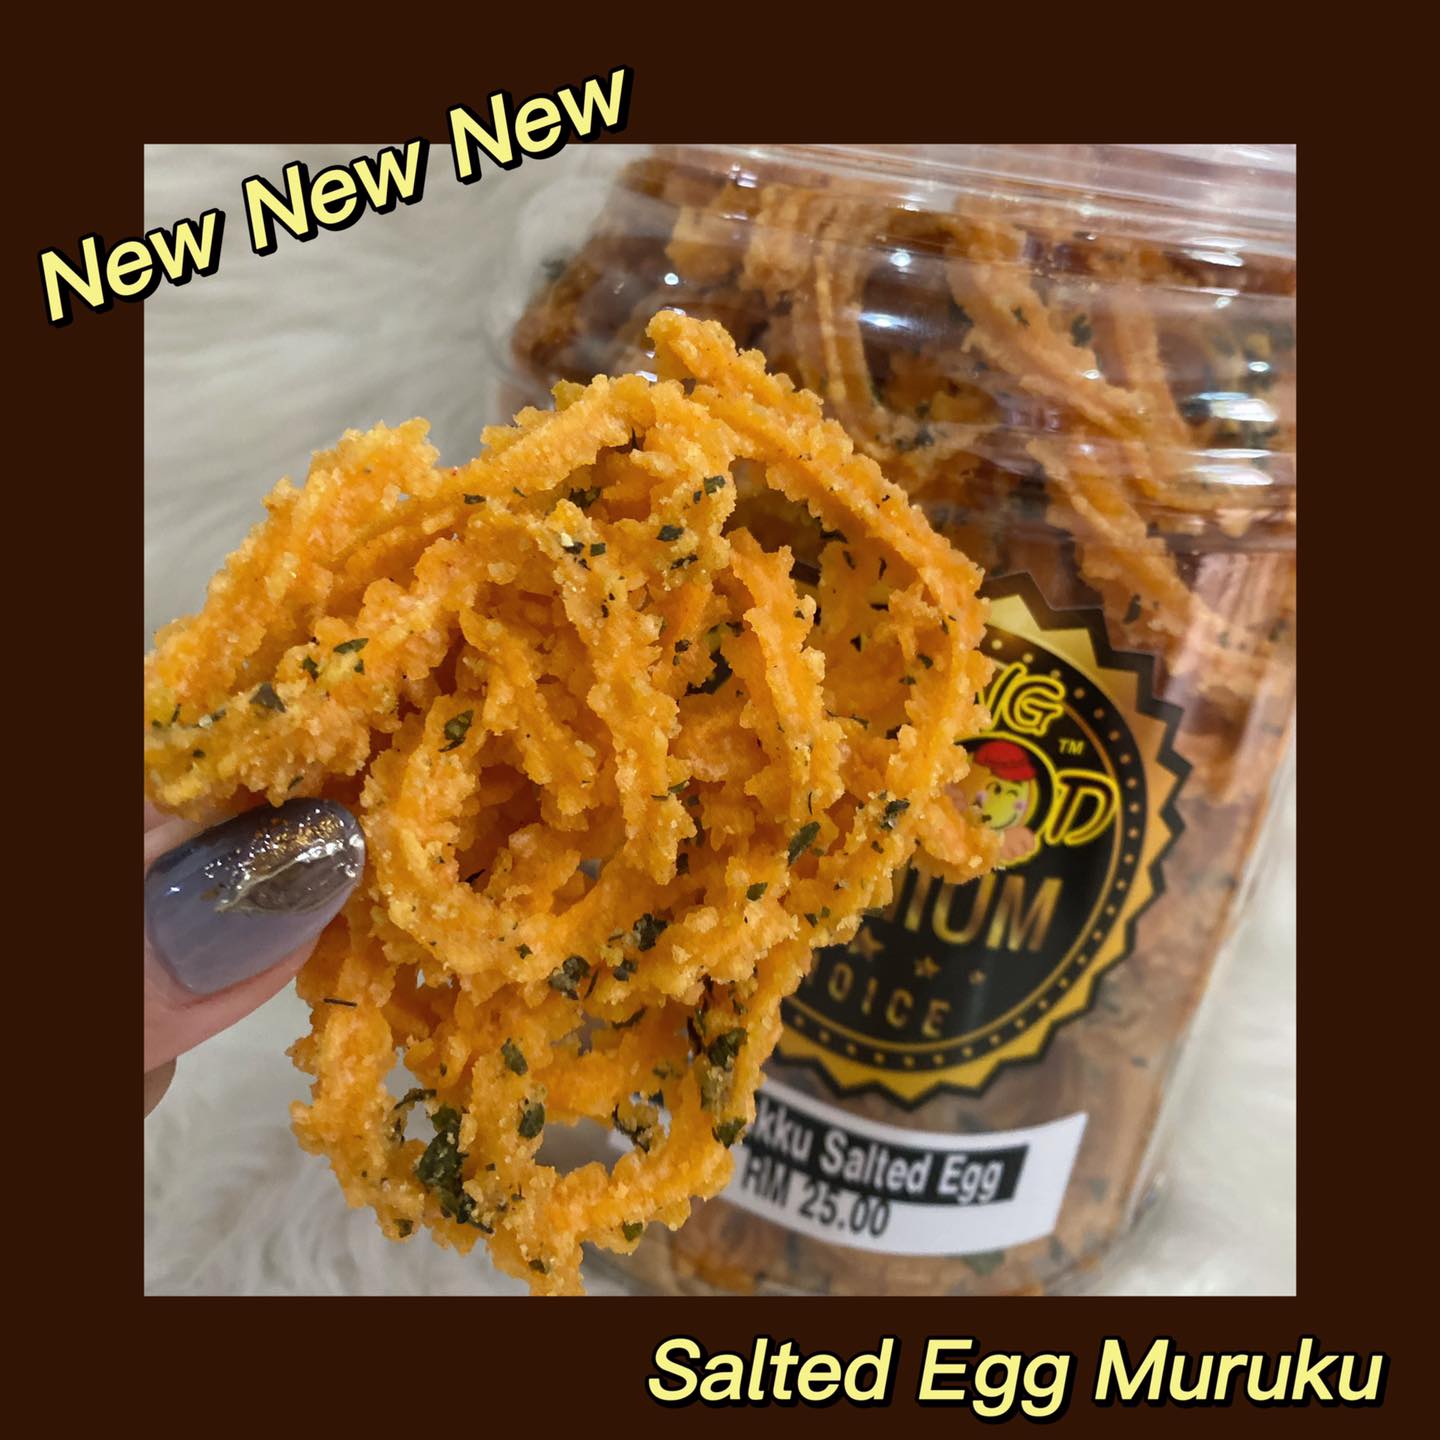 Muruku Salted Egg